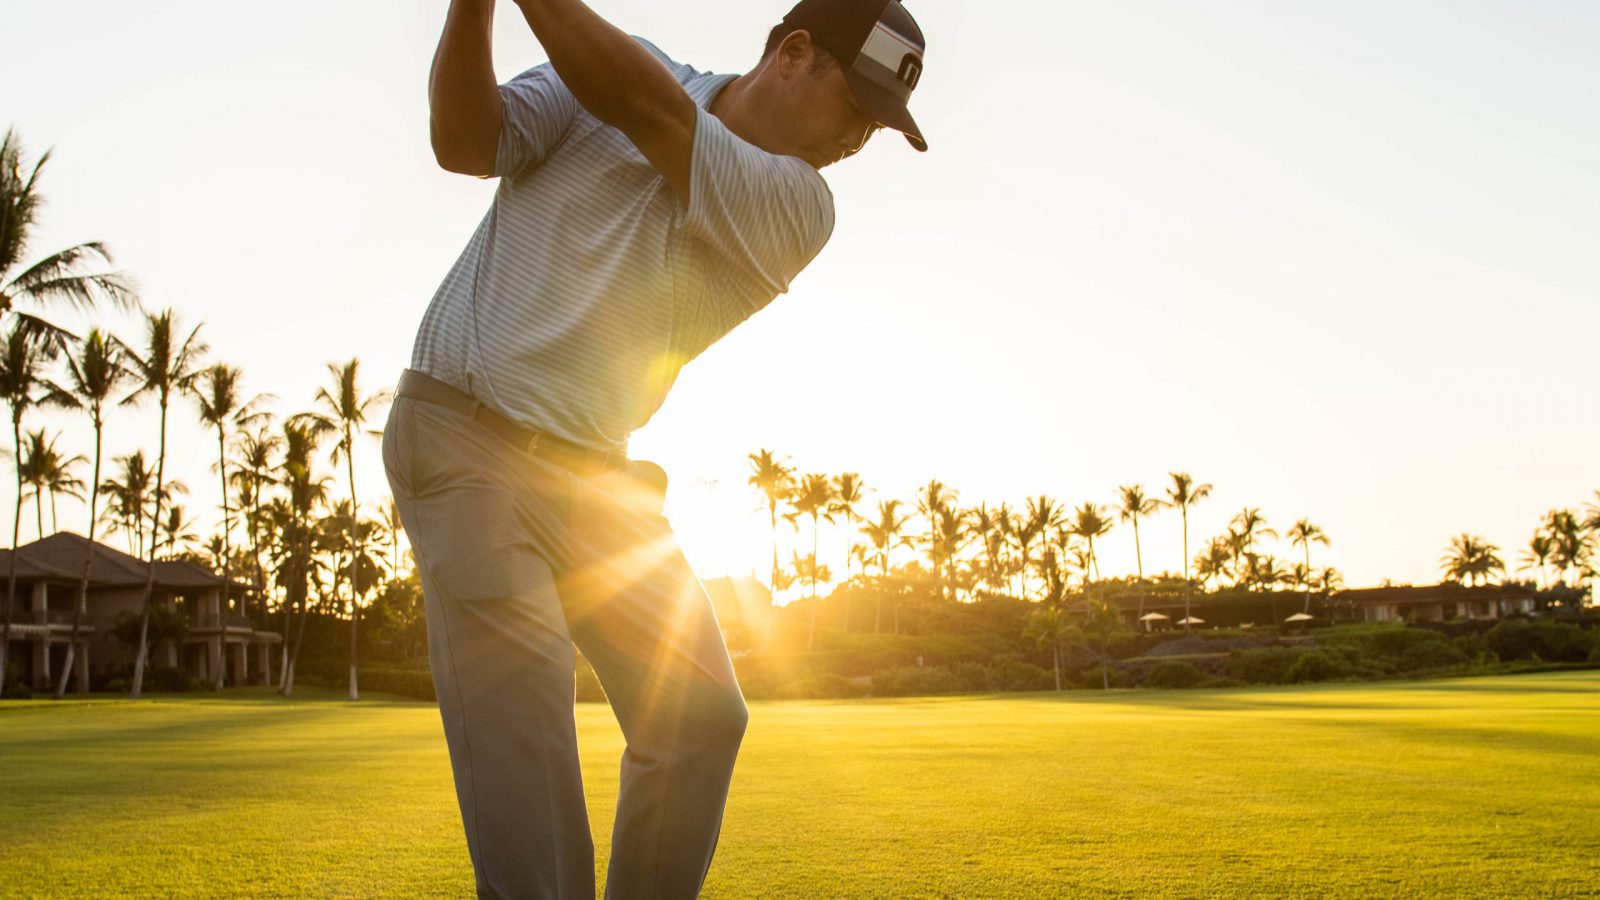 Golf Pro Garratt Okamura takes a swing a golf ball with setting sun in background